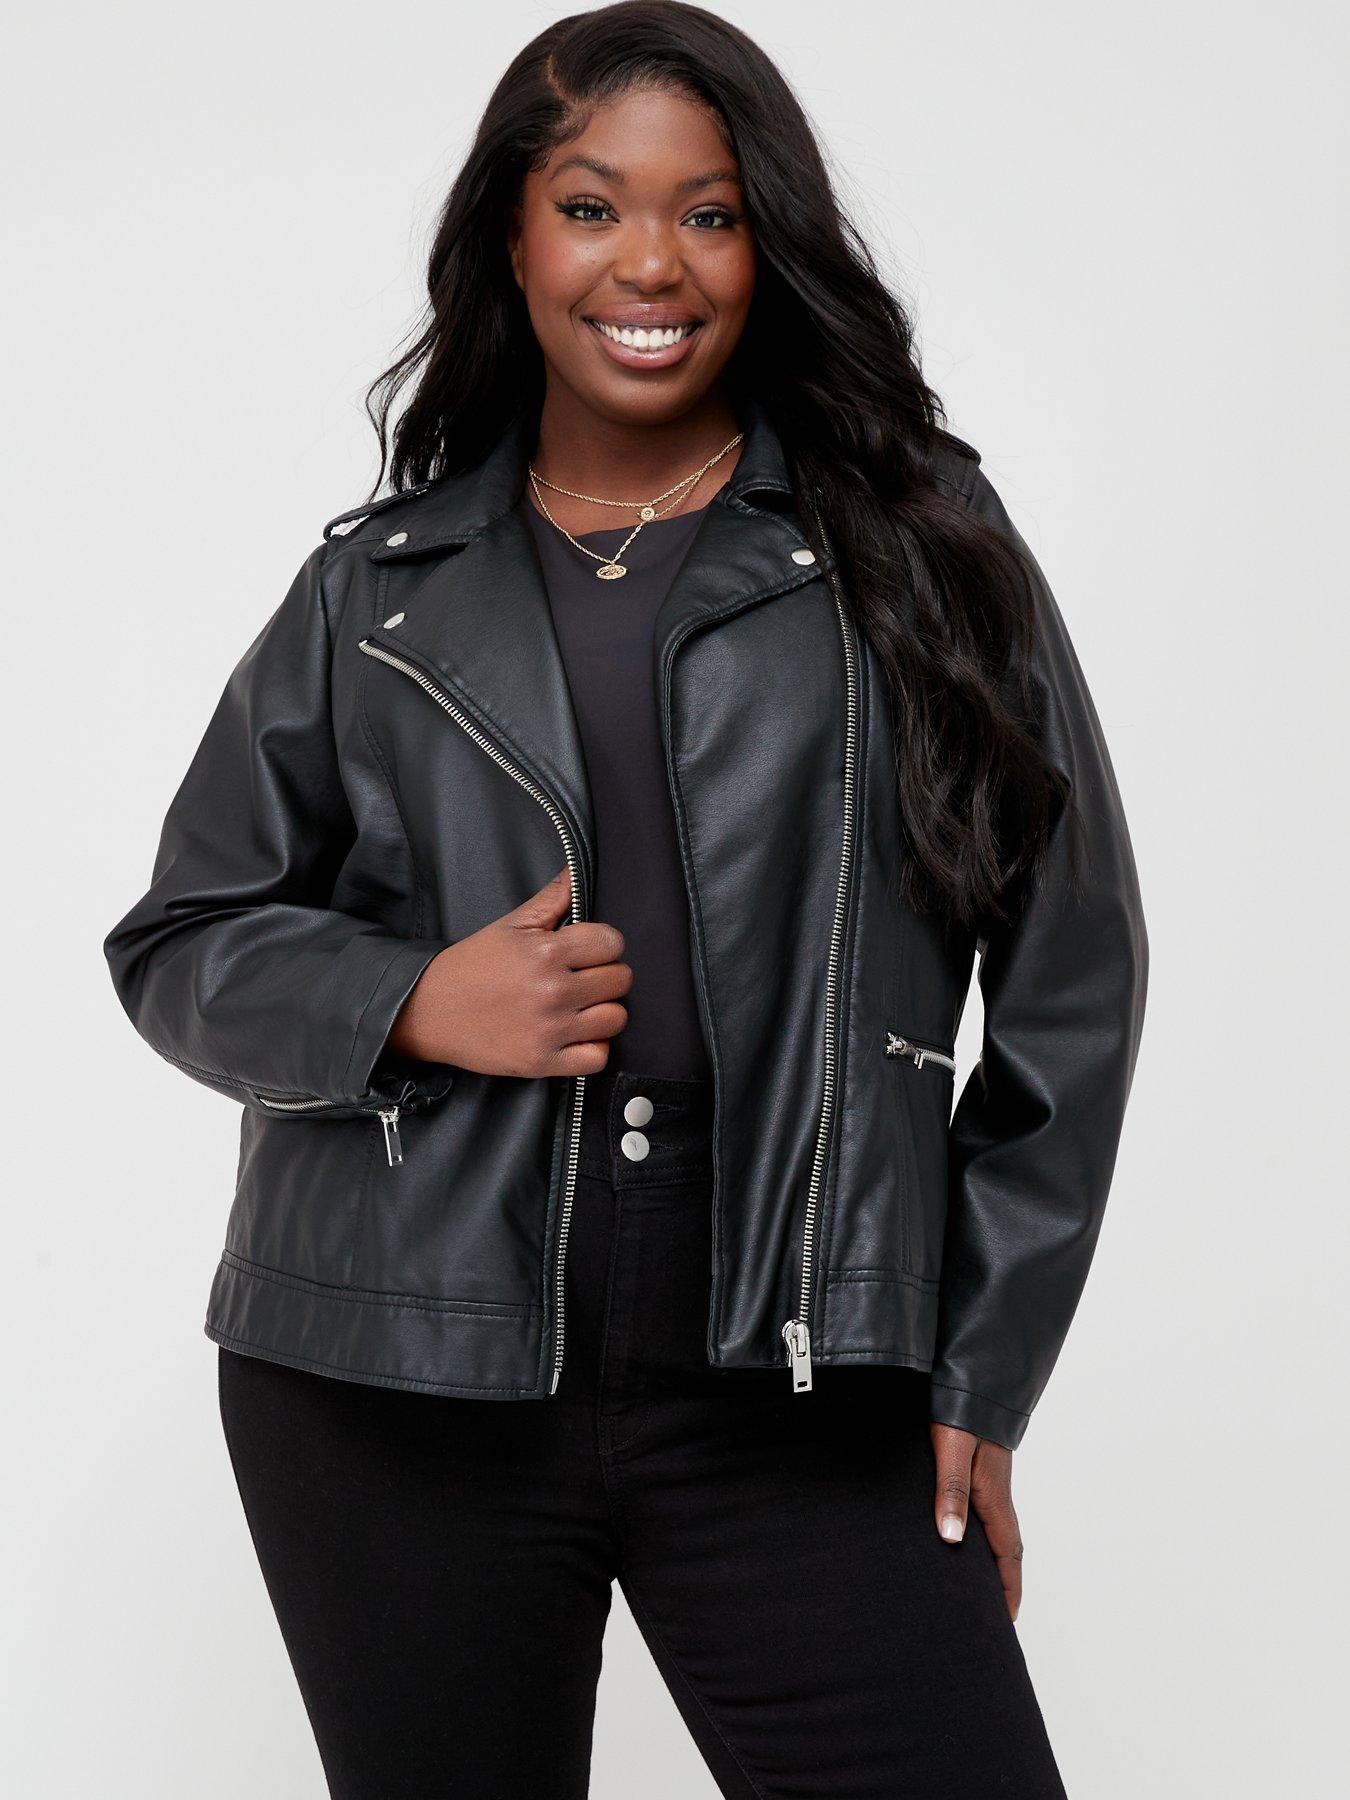 Calvin Klein Women Leather Jacket Convertible Collar New! Size M